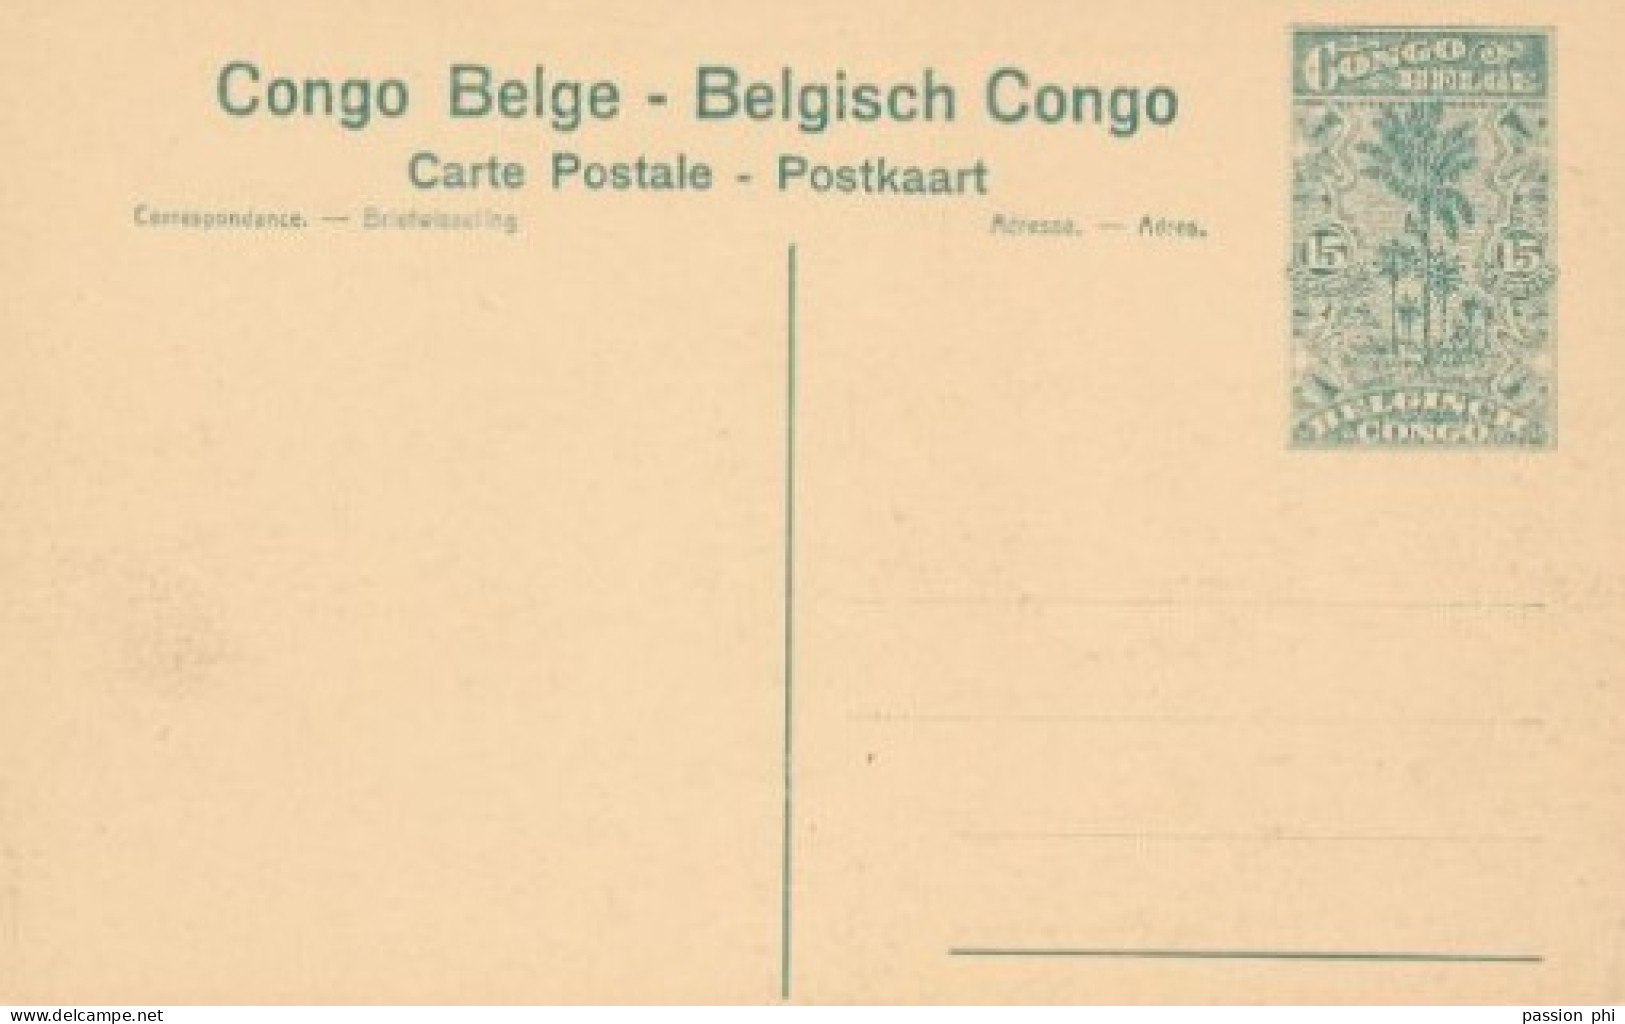 BELGIAN CONGO PPS SBEP 61 VIEW 115 UNUSED - Entiers Postaux